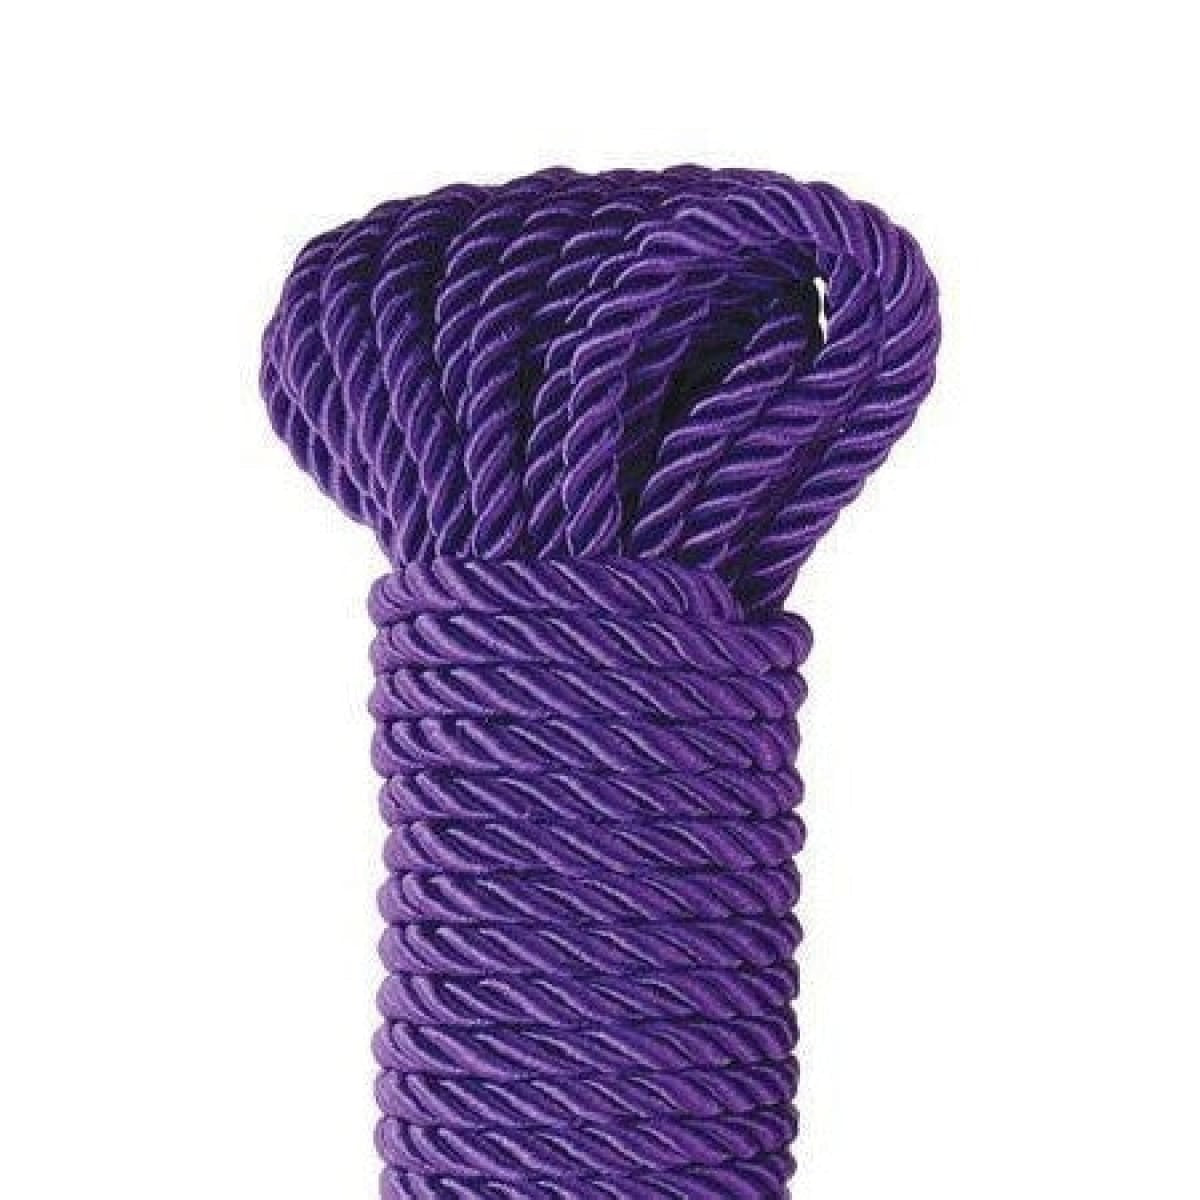 Fetish Fantasy Series Deluxe Silk Rope Purple Intimates Adult Boutique